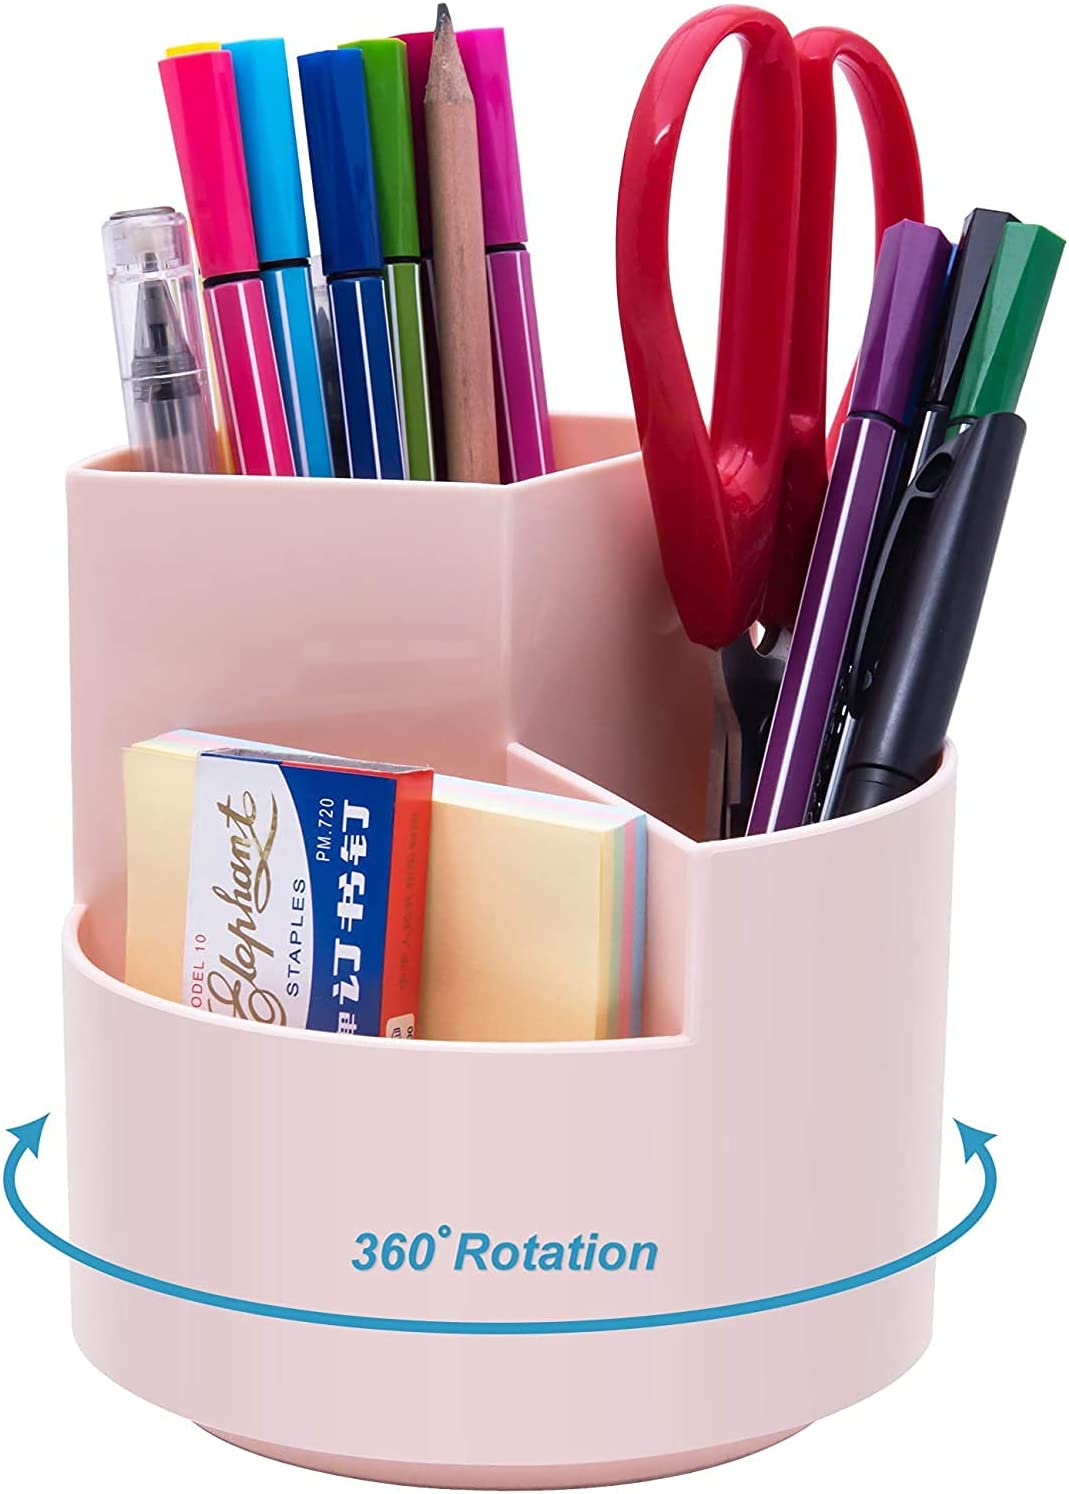 360 degree rotating pen holder - Pink